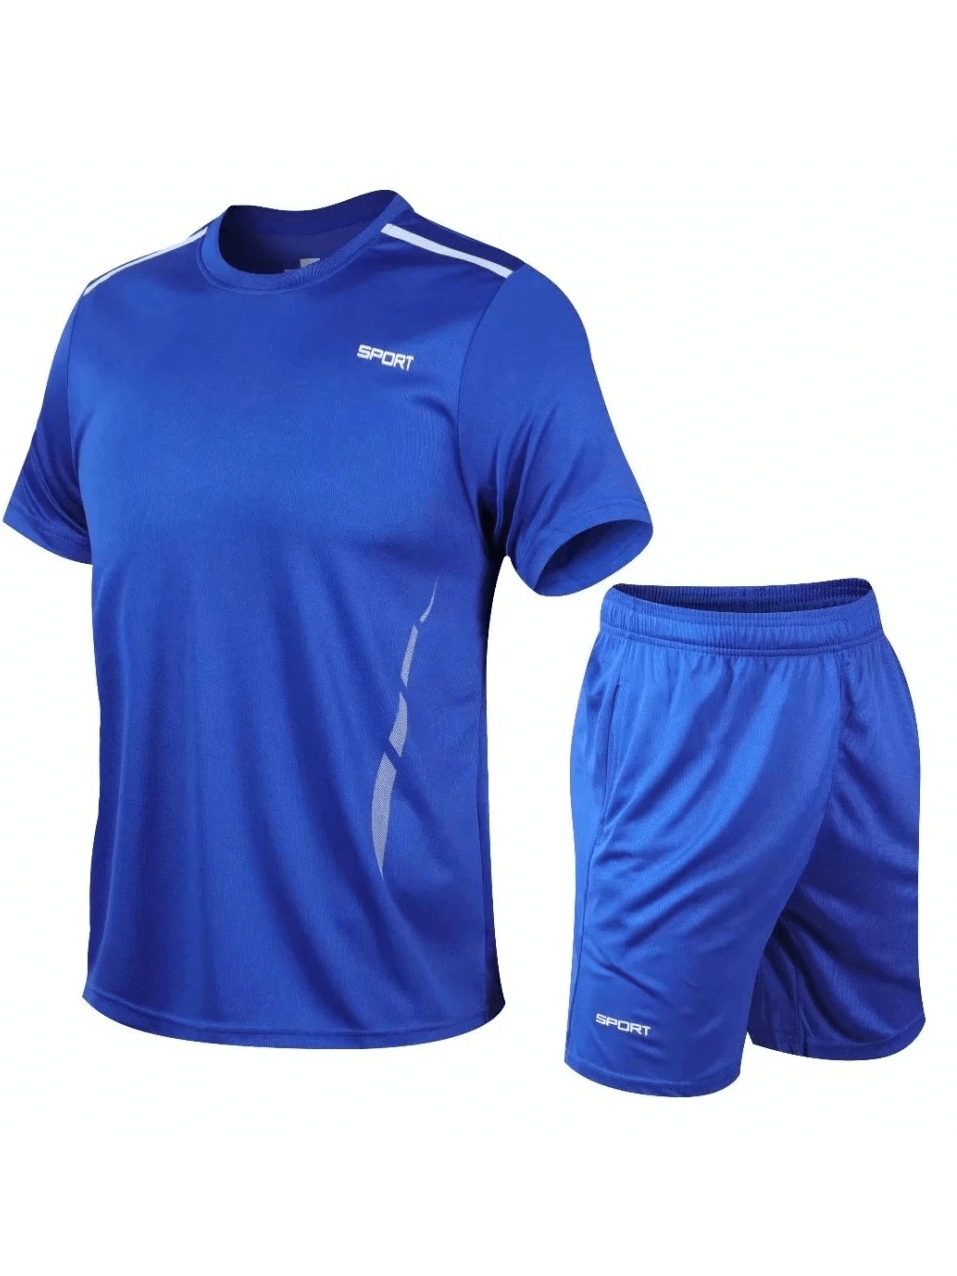 Athletic O-Neck Sportswear Set for Men - SF2017